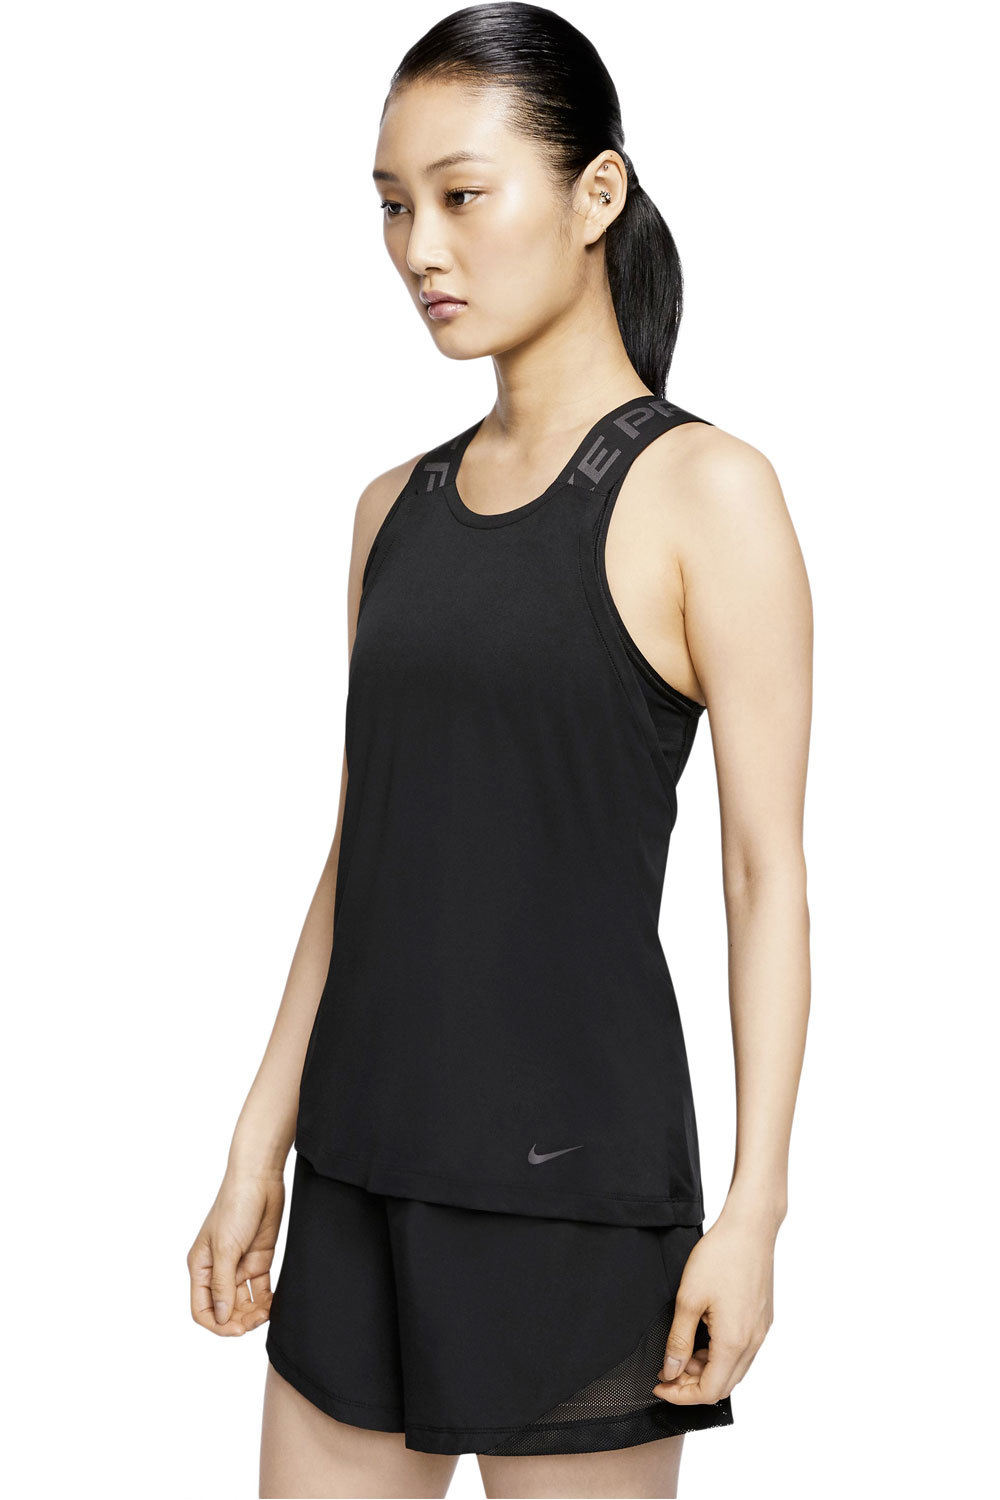 Nike camiseta tirantes fitness mujer W NP DRY ELASTIKA TANK ESS BLNE vista frontal